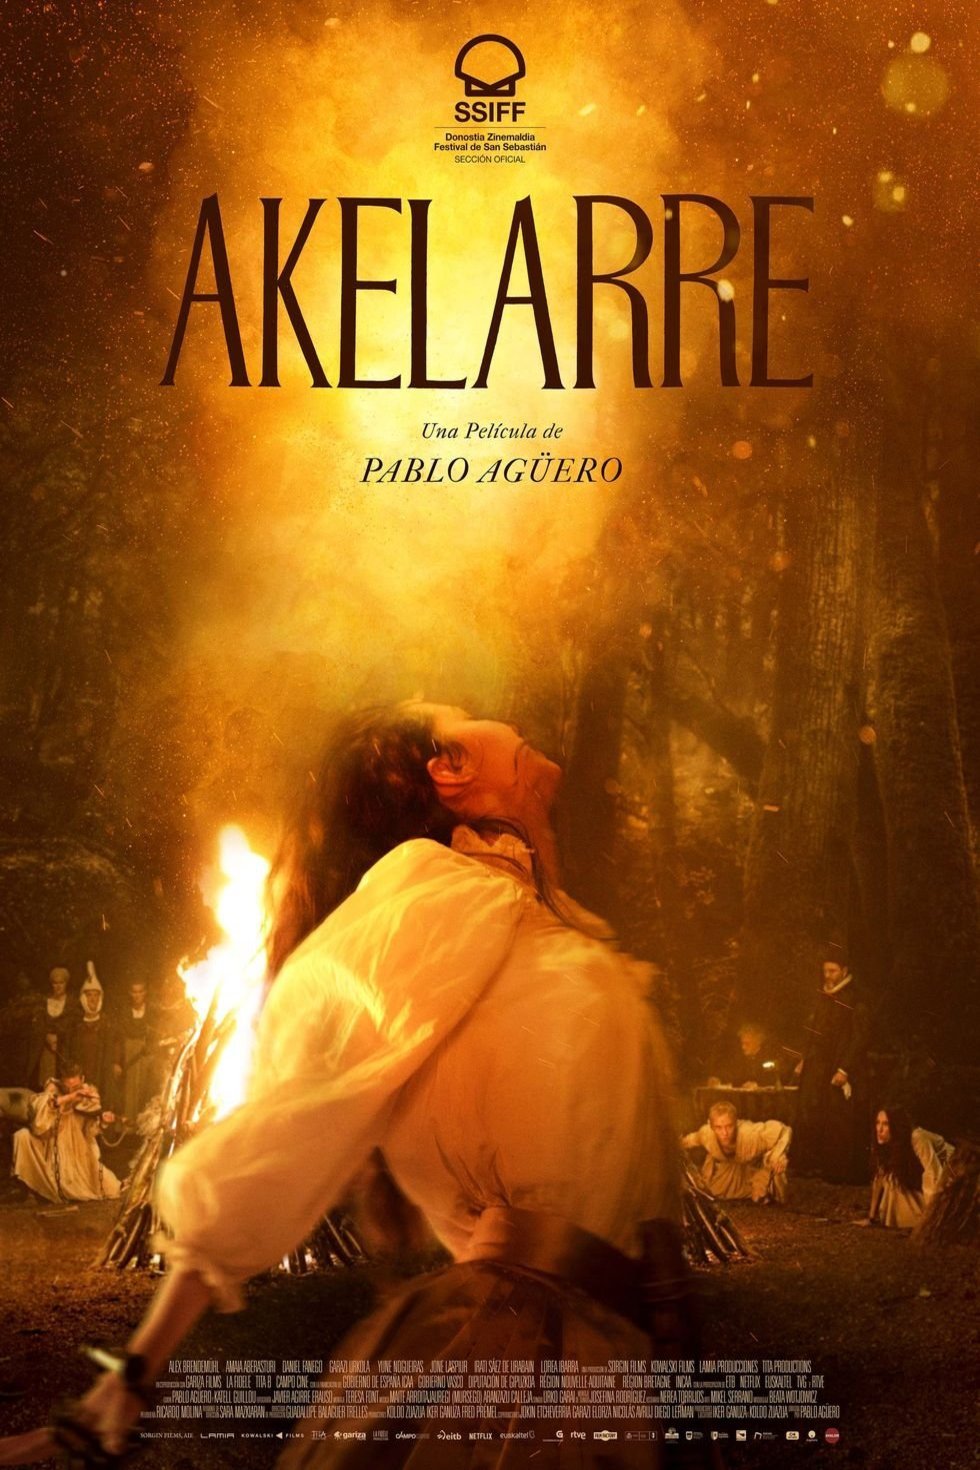 L'affiche originale du film Akelarre en espagnol